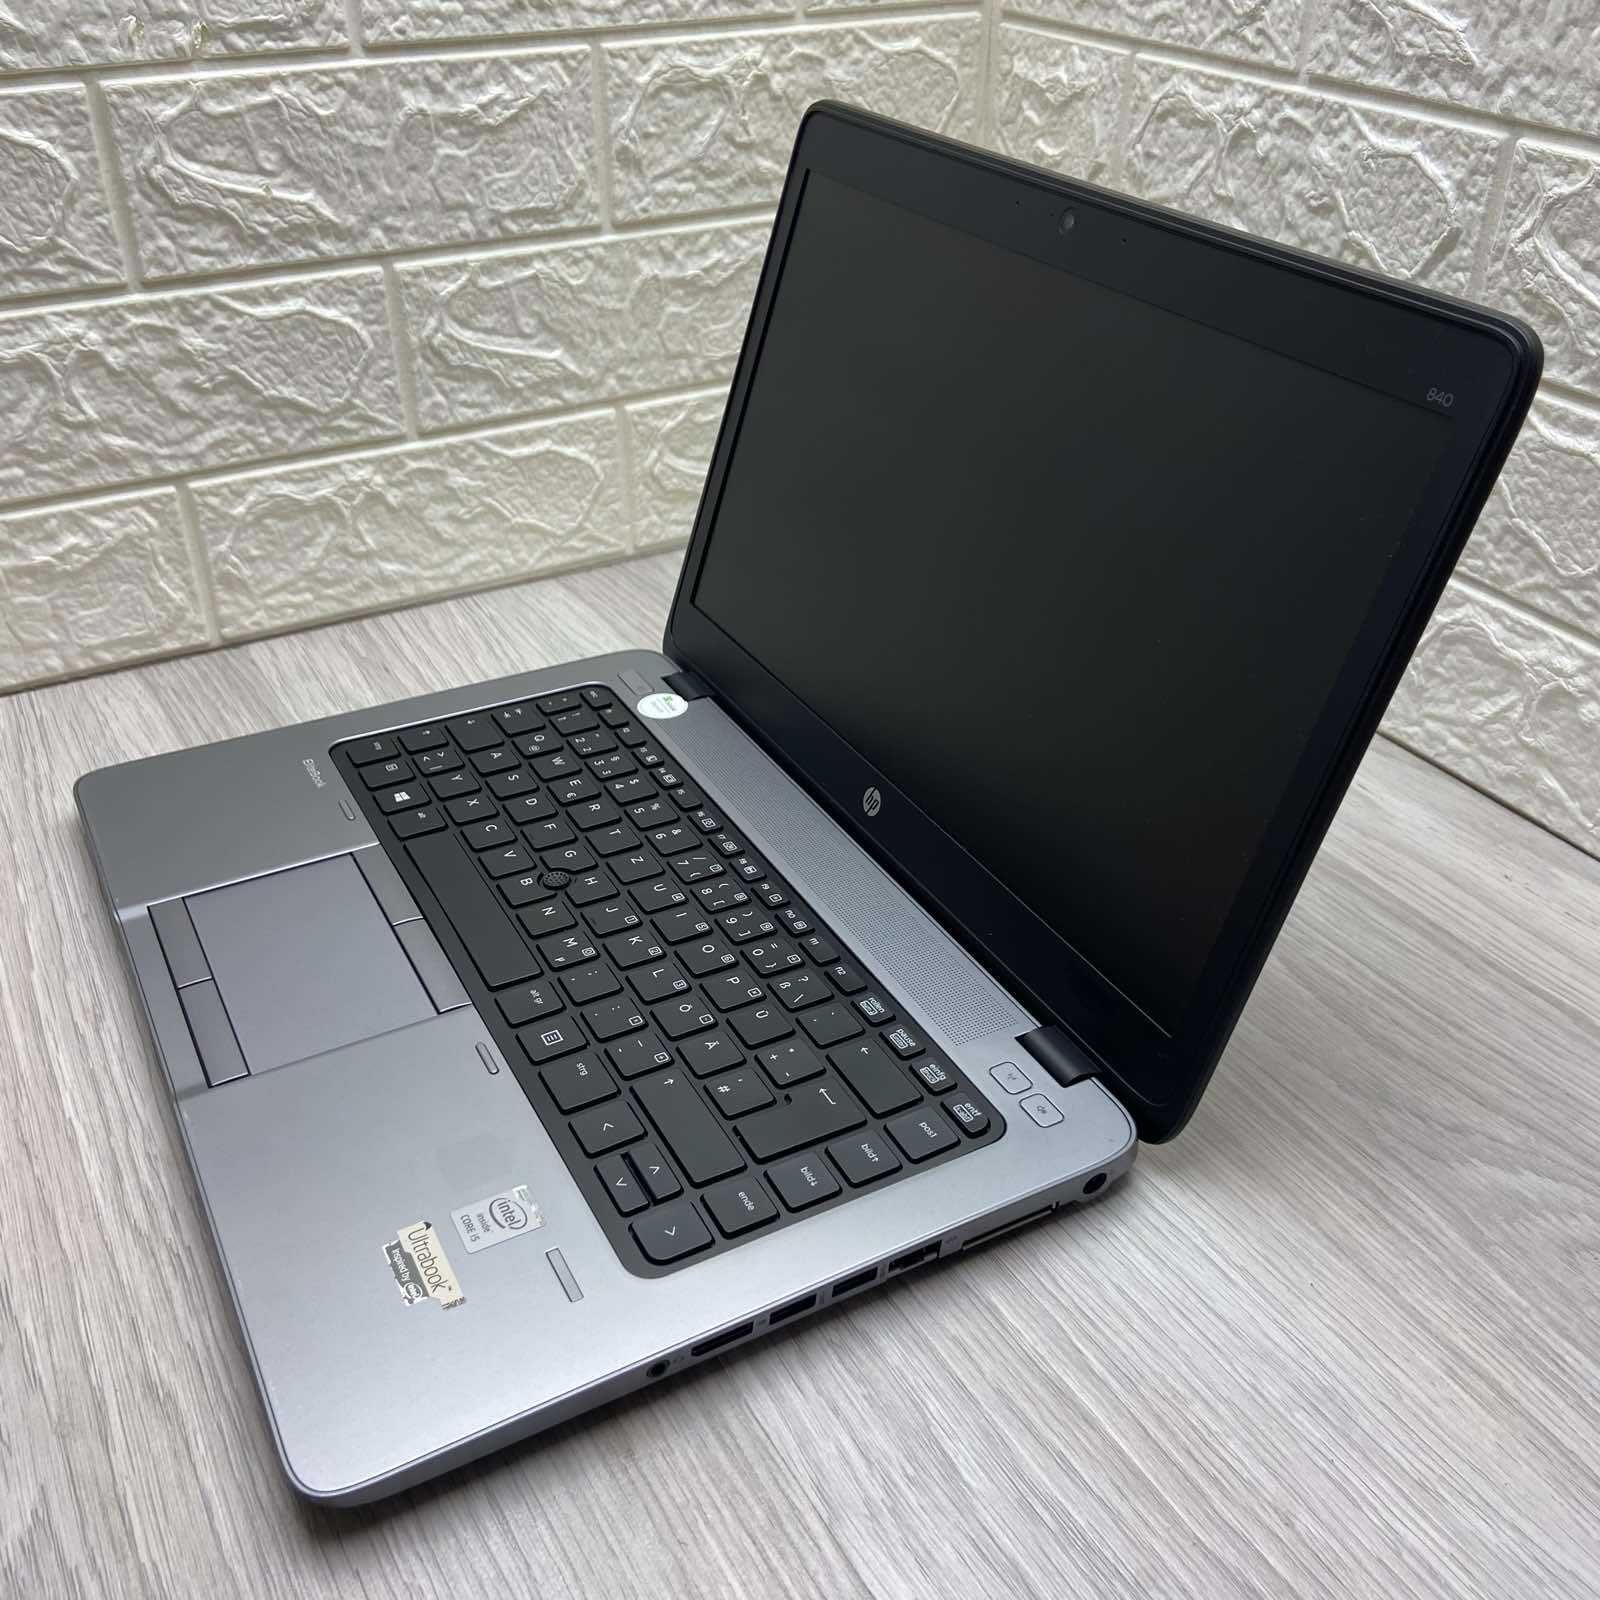 HP EliteBook 840/ i5-4210u 2,40GHZ/8 GB DDR3/Graphics 4400/240 GB SSD